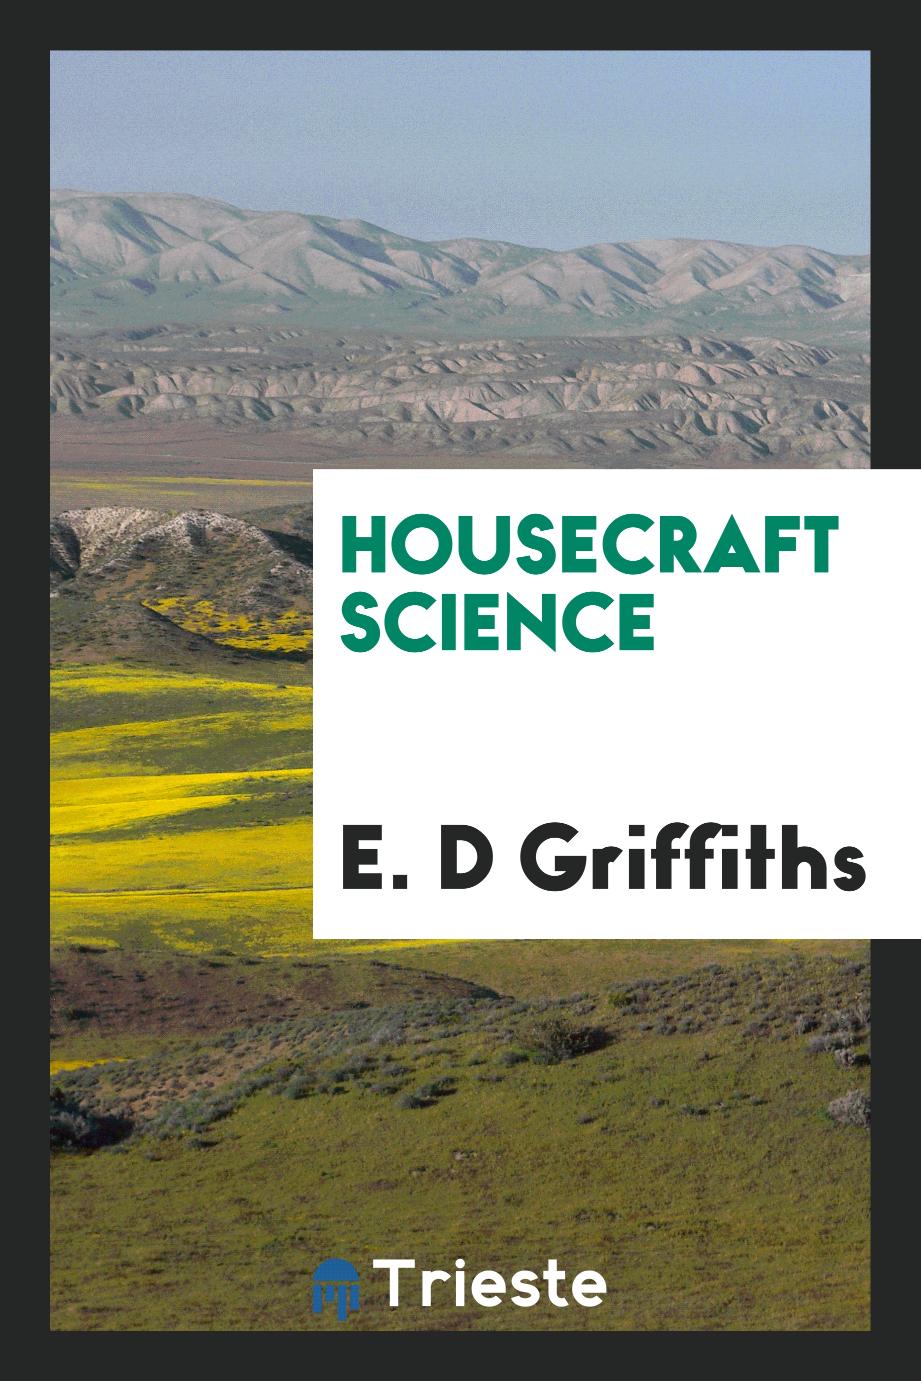 Housecraft science